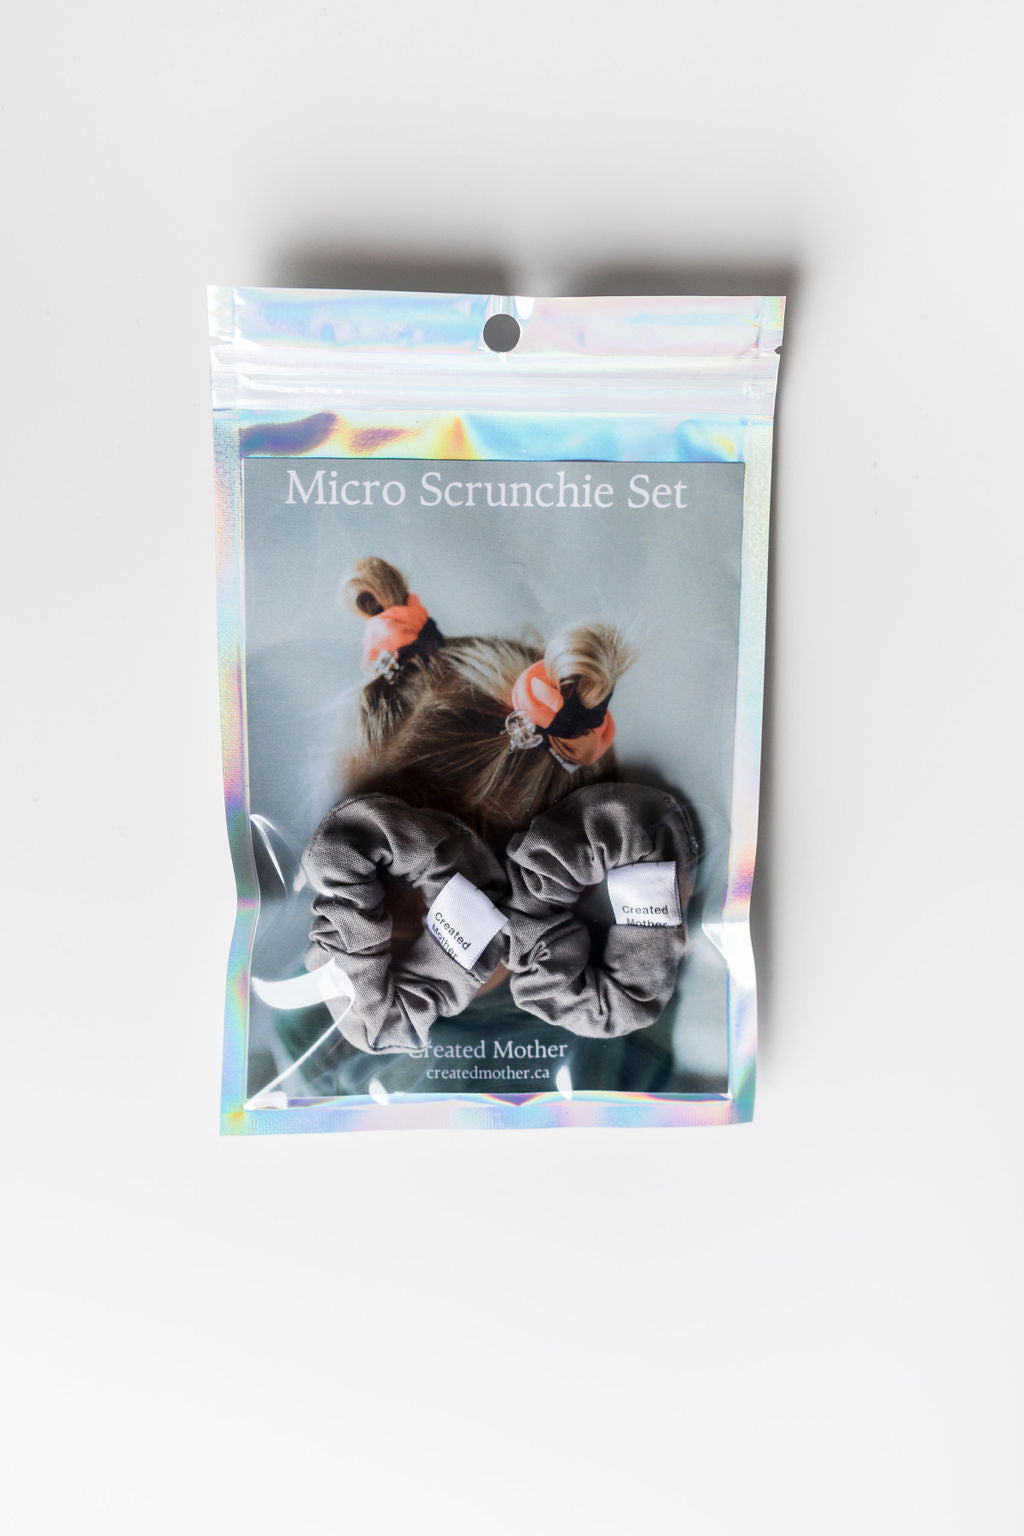 Micro Scrunchie Sets